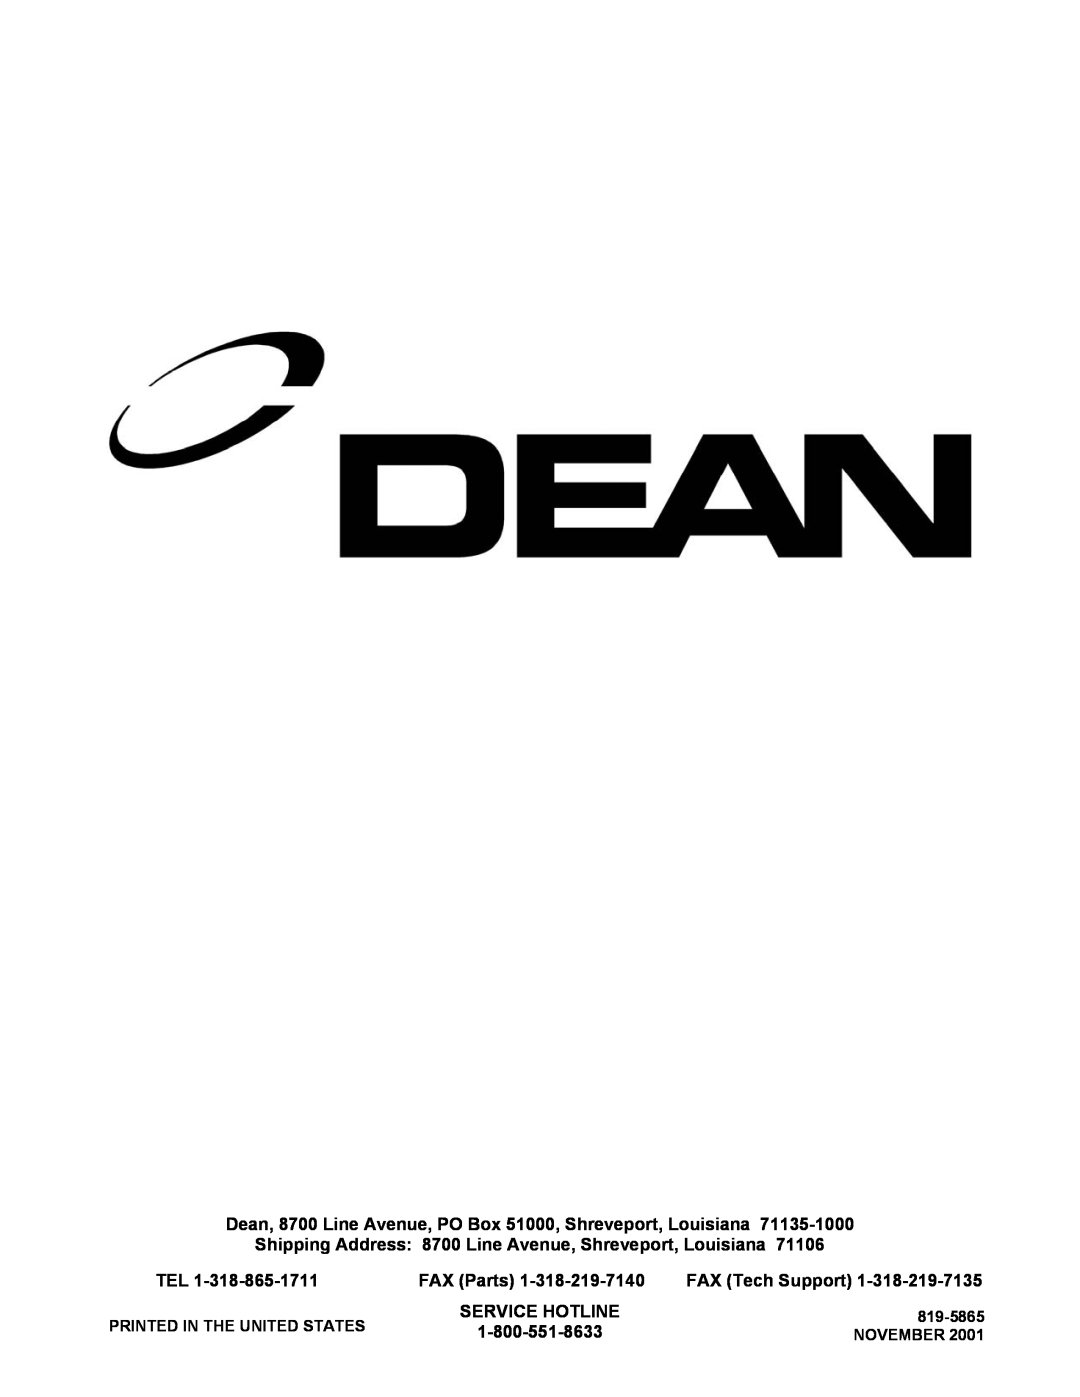 Frymaster Dean Compu-Fry manual Dean, 8700 Line Avenue, PO Box 51000, Shreveport, Louisiana, FAX Parts, FAX Tech Support 